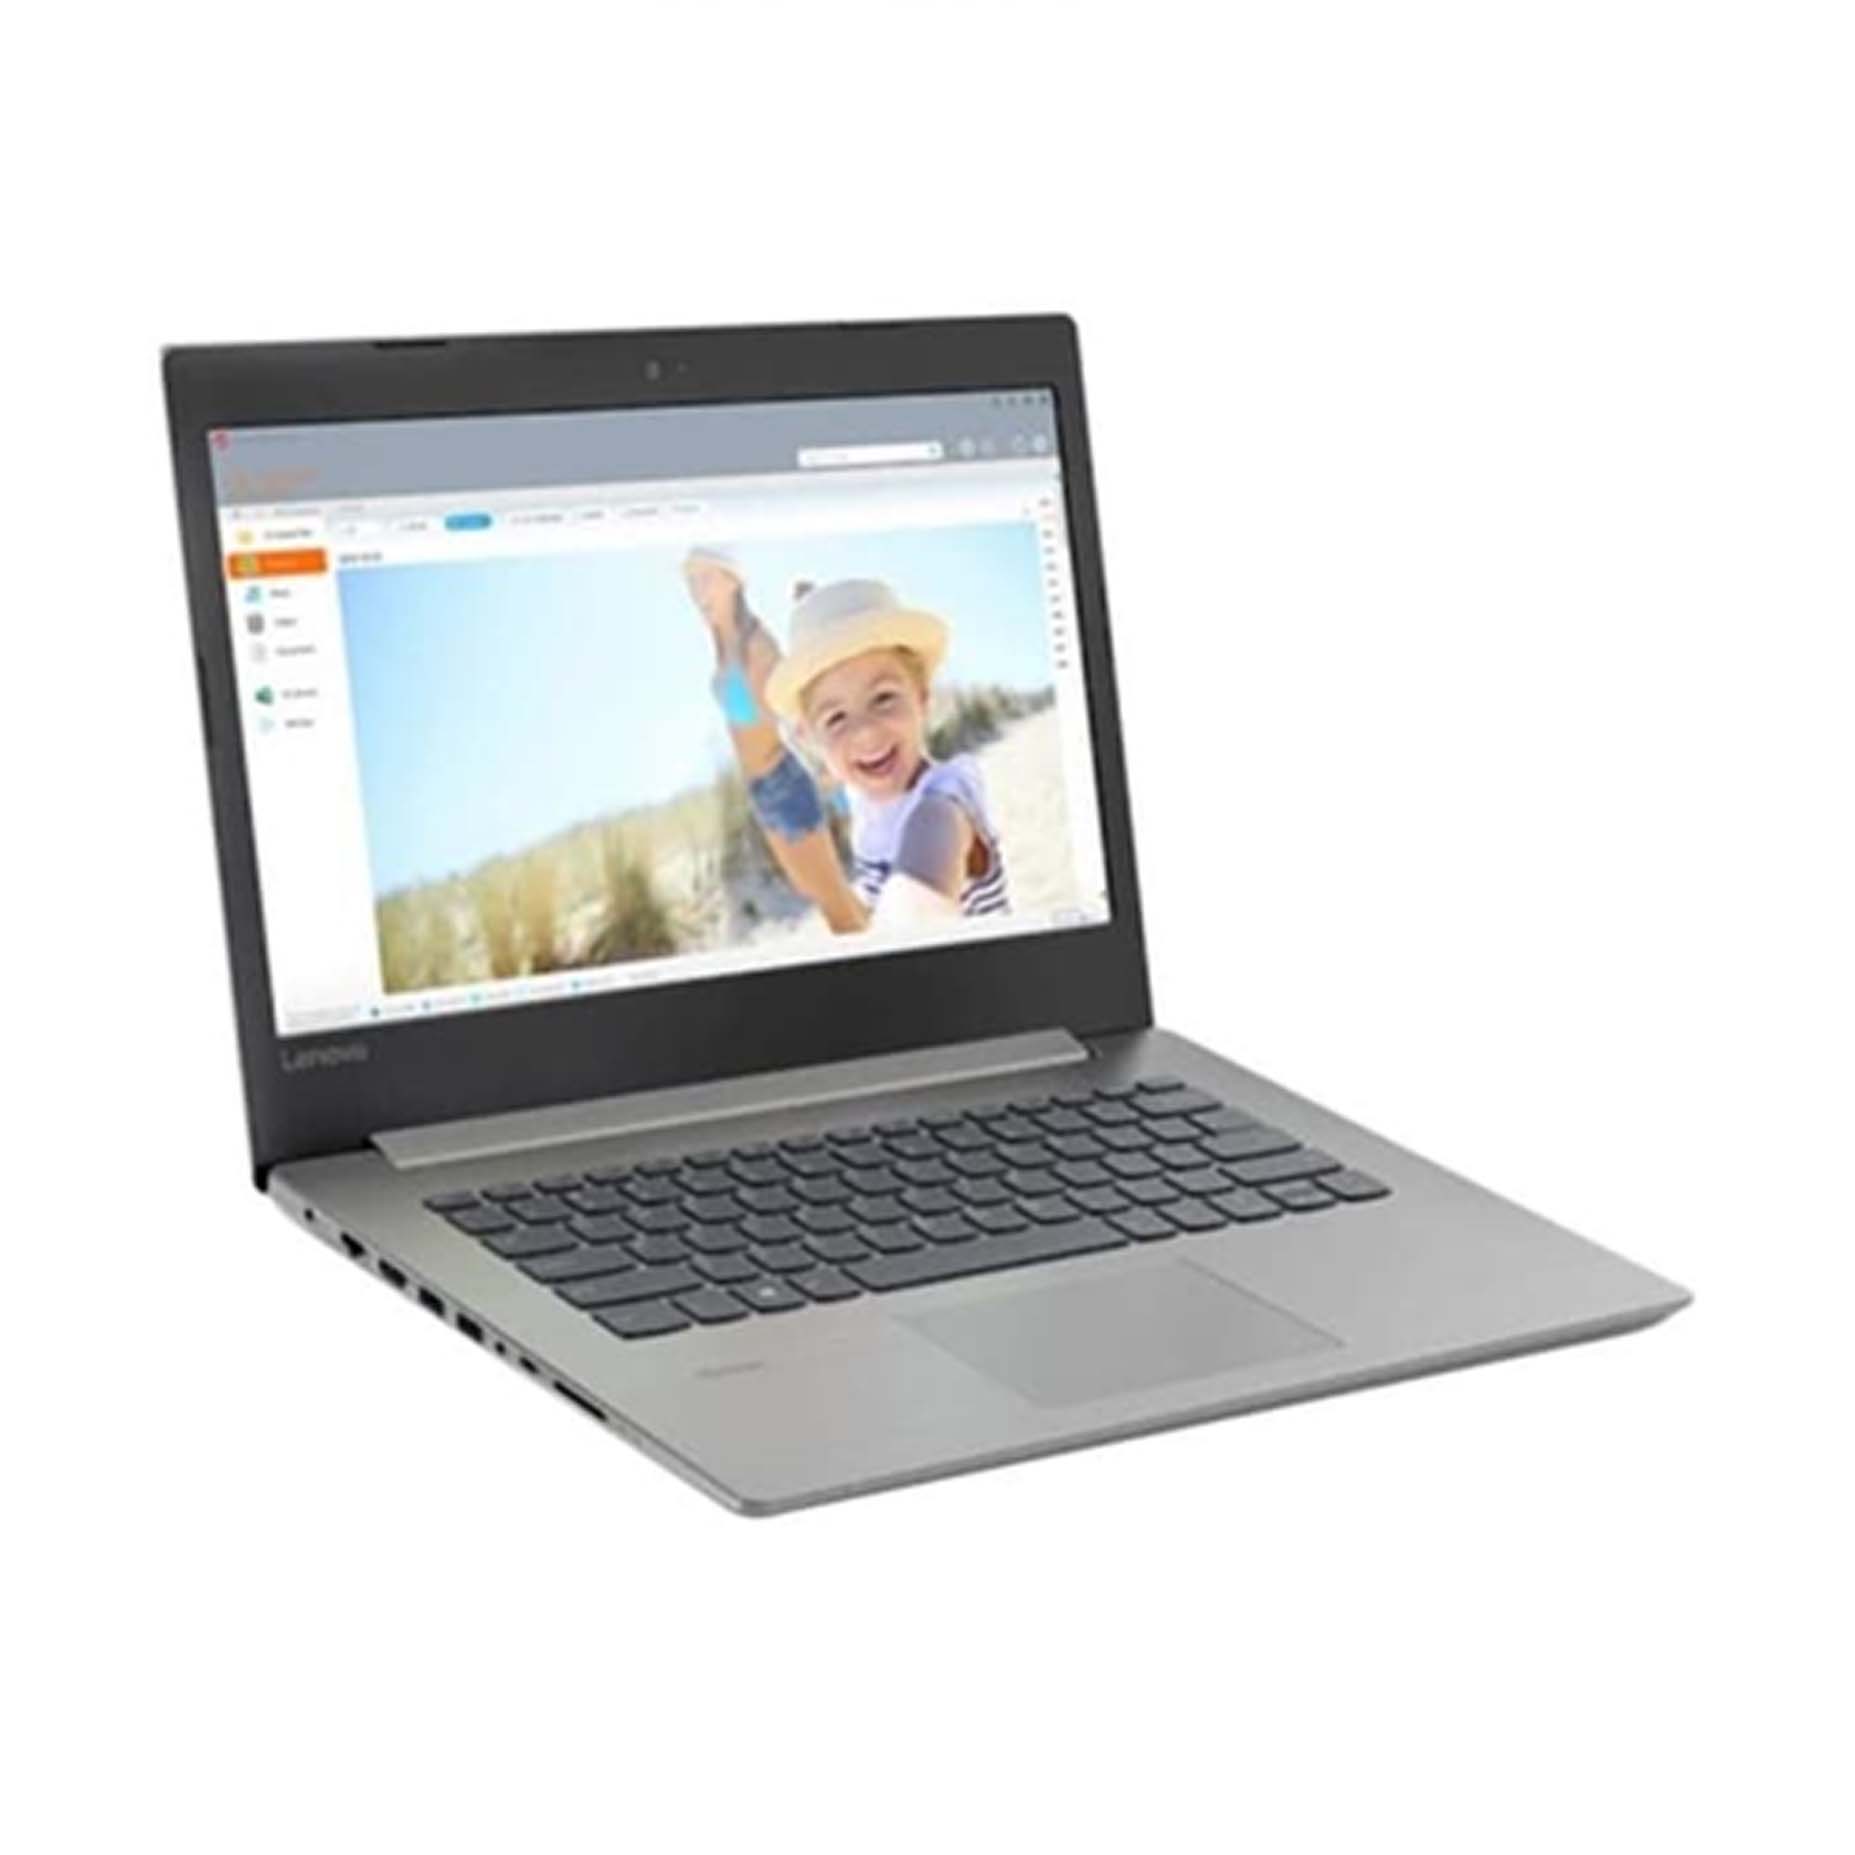 Harga Lenovo Ideapad IP 330-14AST 3FID Laptop AMD Dual Core A9-9425 4GB 1TB 14 Inch DOS Grey